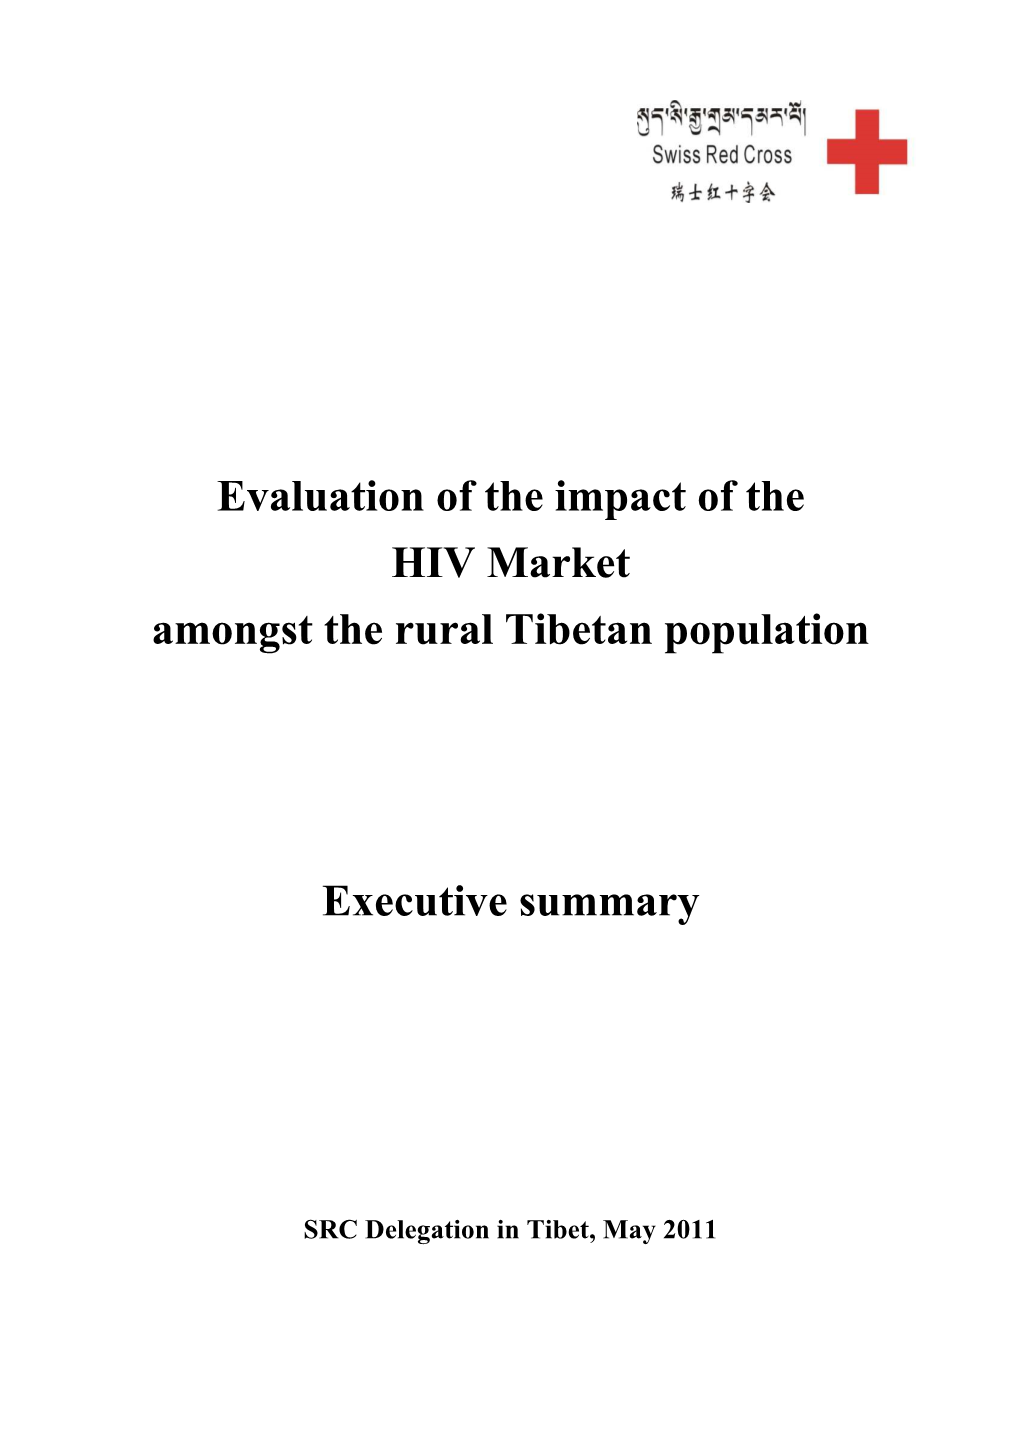 HIV Market Evaluation-2011-02-16.Xlsx